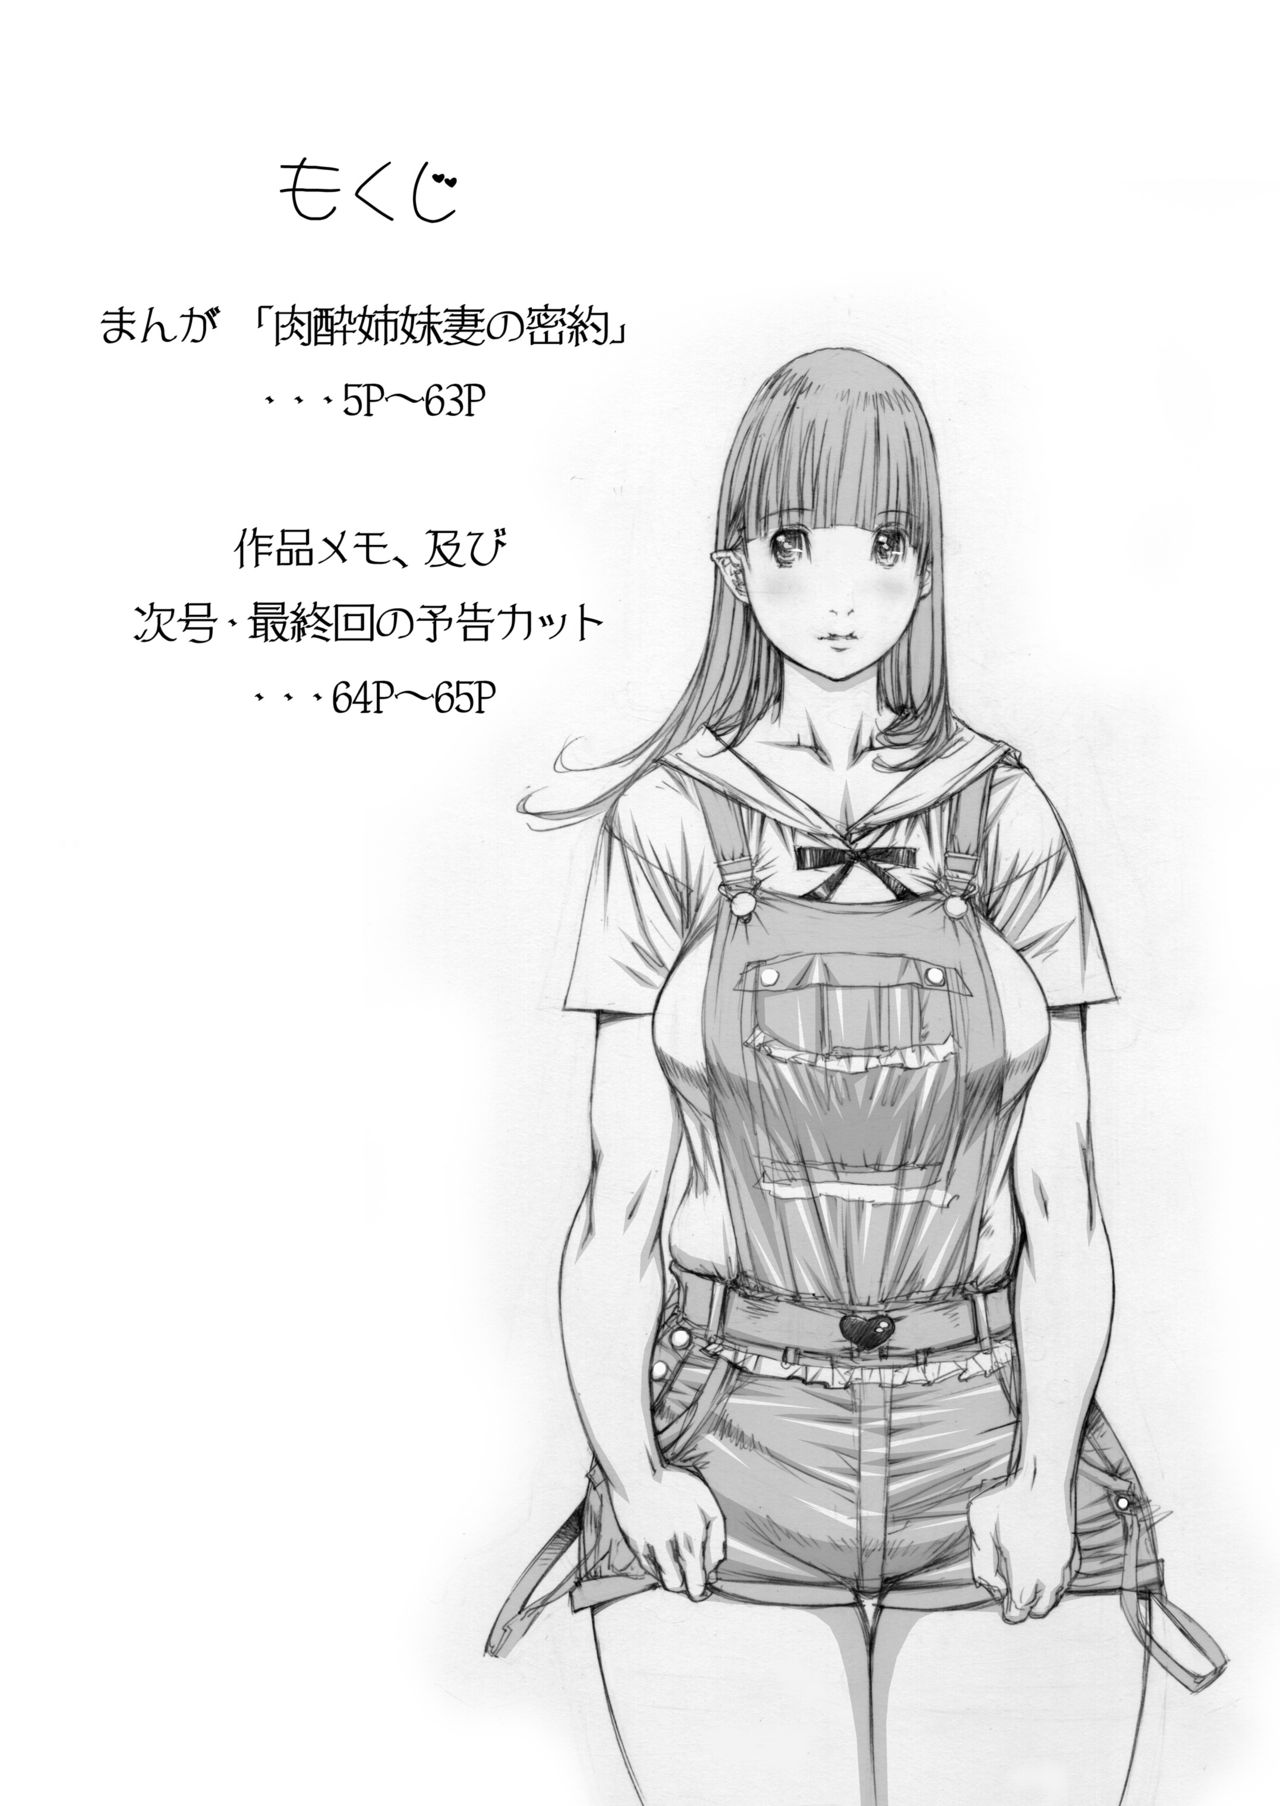 [Milk Tank (Shiromi Kazuhisa)] Naburikko 3 Final FraKctured -Nikuyoi Shimai Marika to Akiko- DL ver. (Original) (同人誌) [Milk Tank (しろみかずひさ)] 嬲 ~なぶりっこ 3~ Final FraKctured -肉醉姉妹 マリカとアキコ- DL版 (オリジナル)